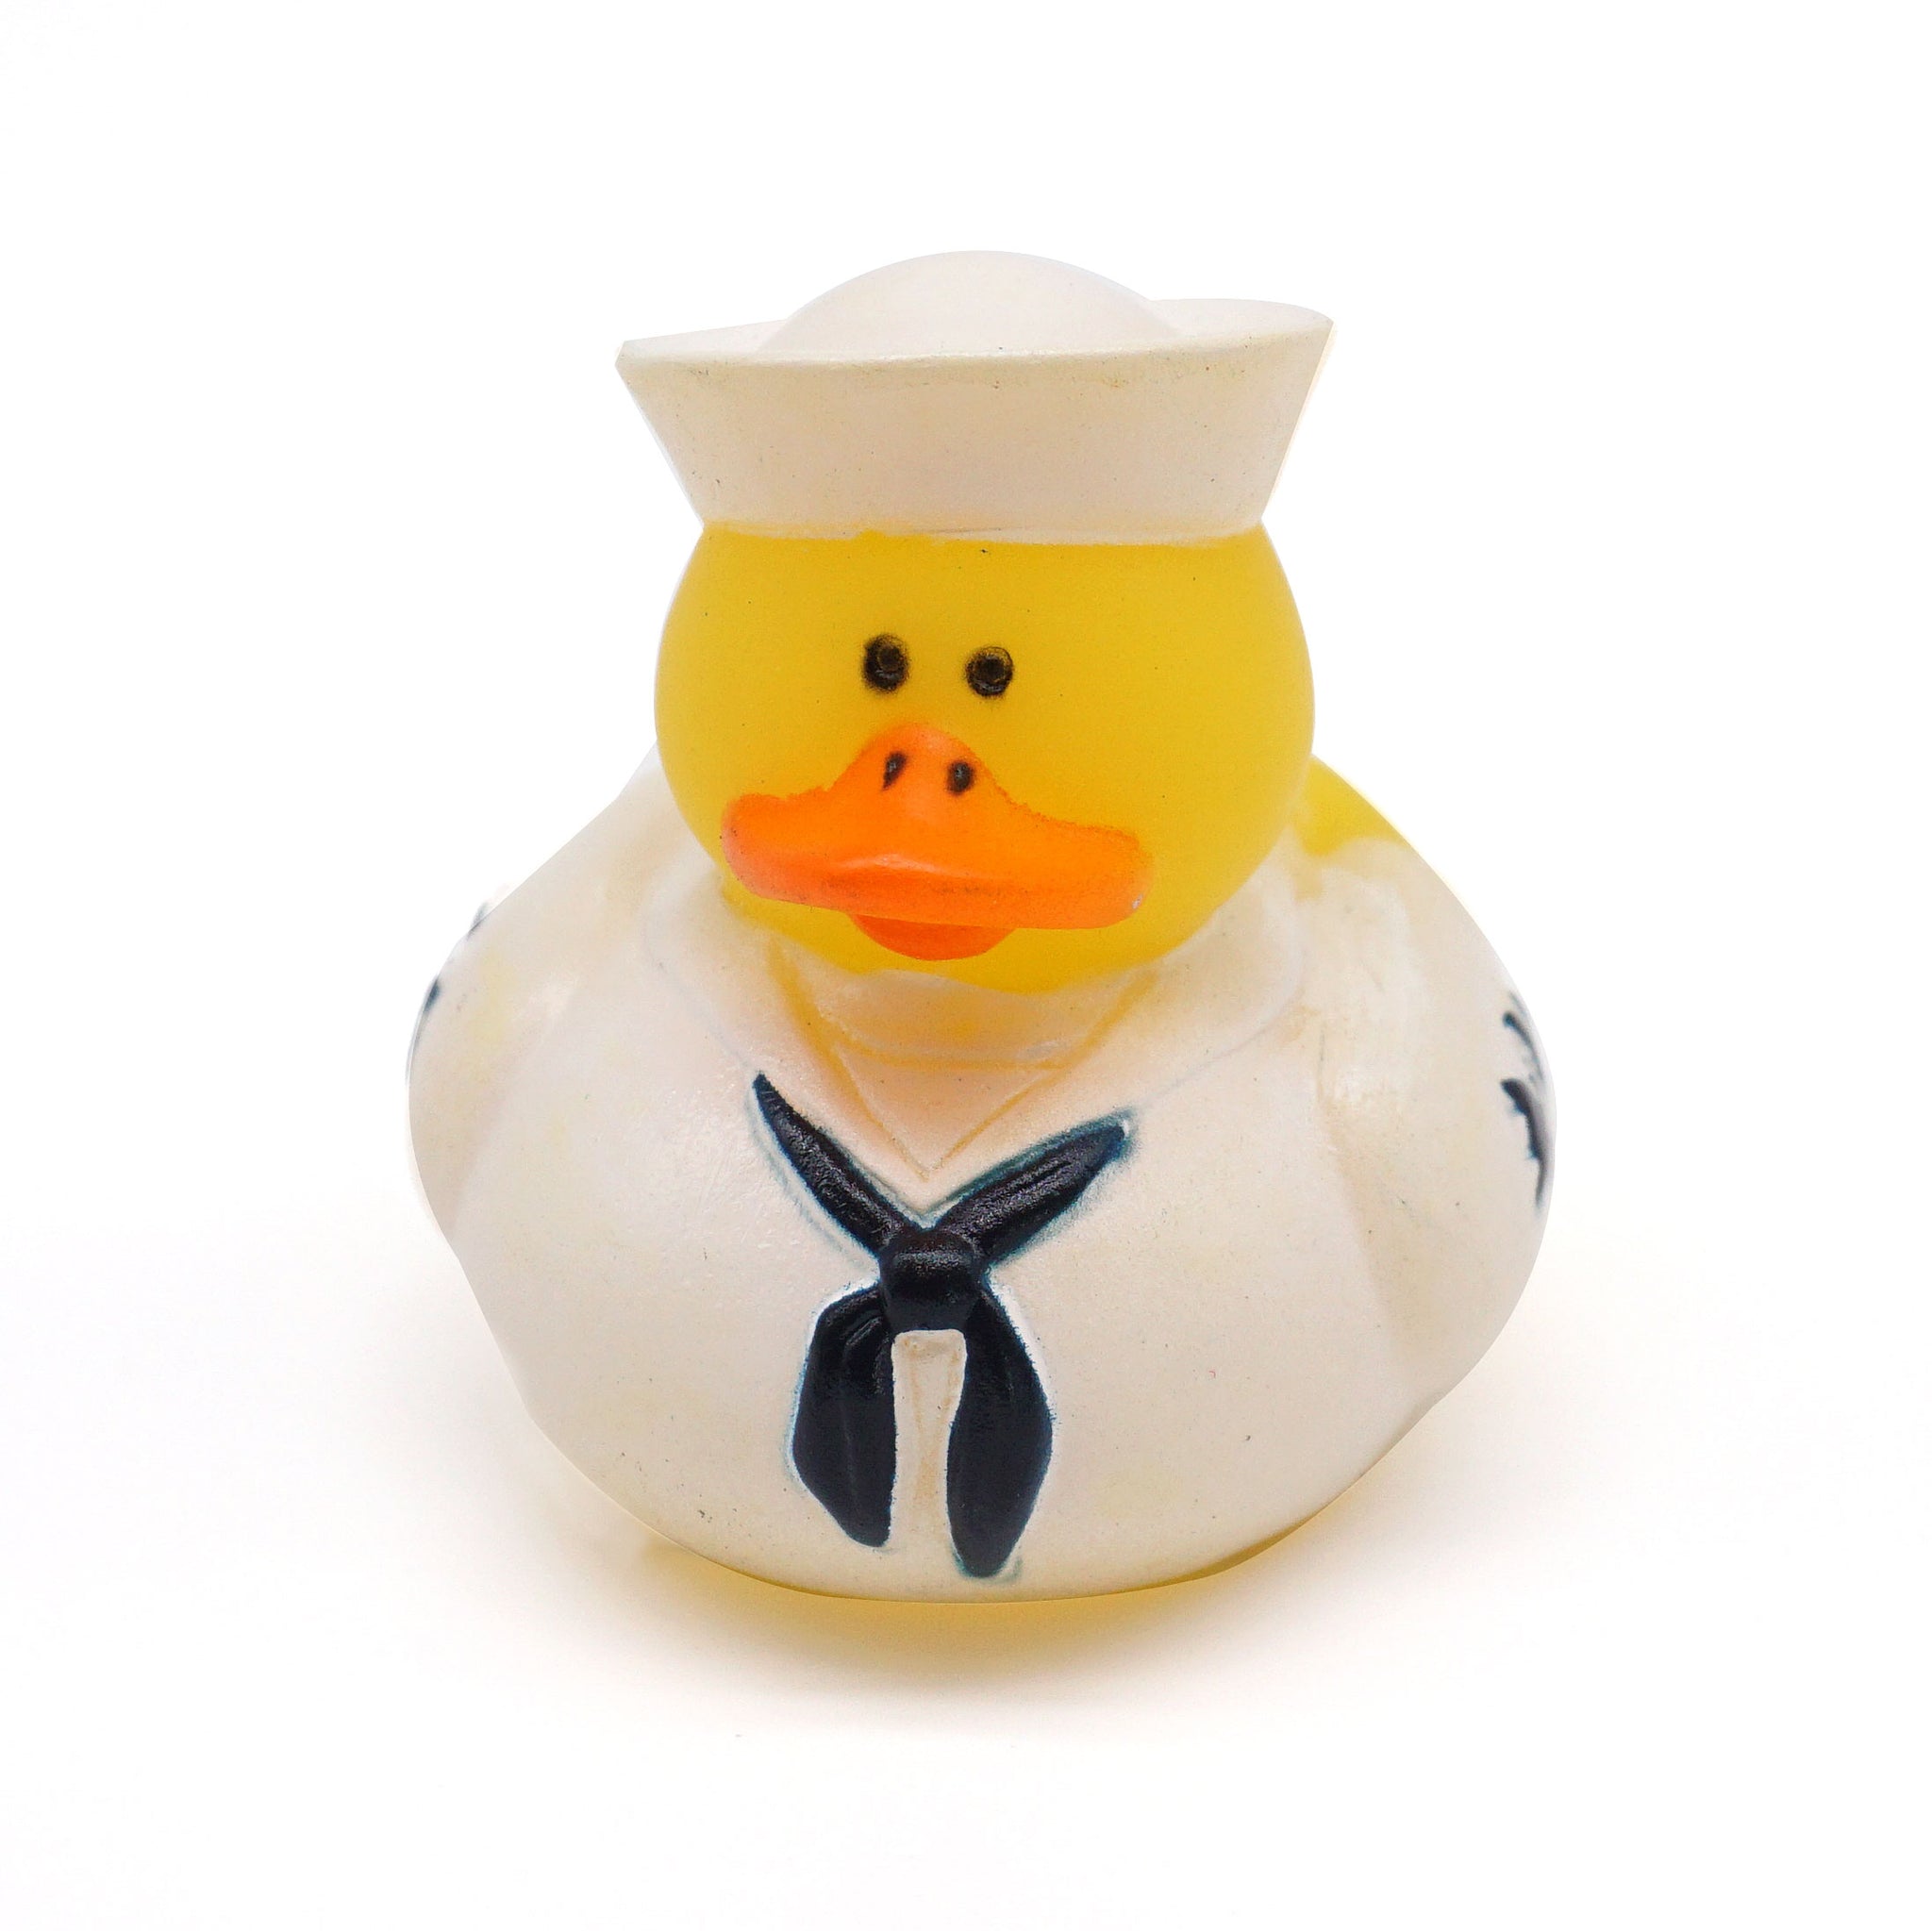 Navy Rubber Duck